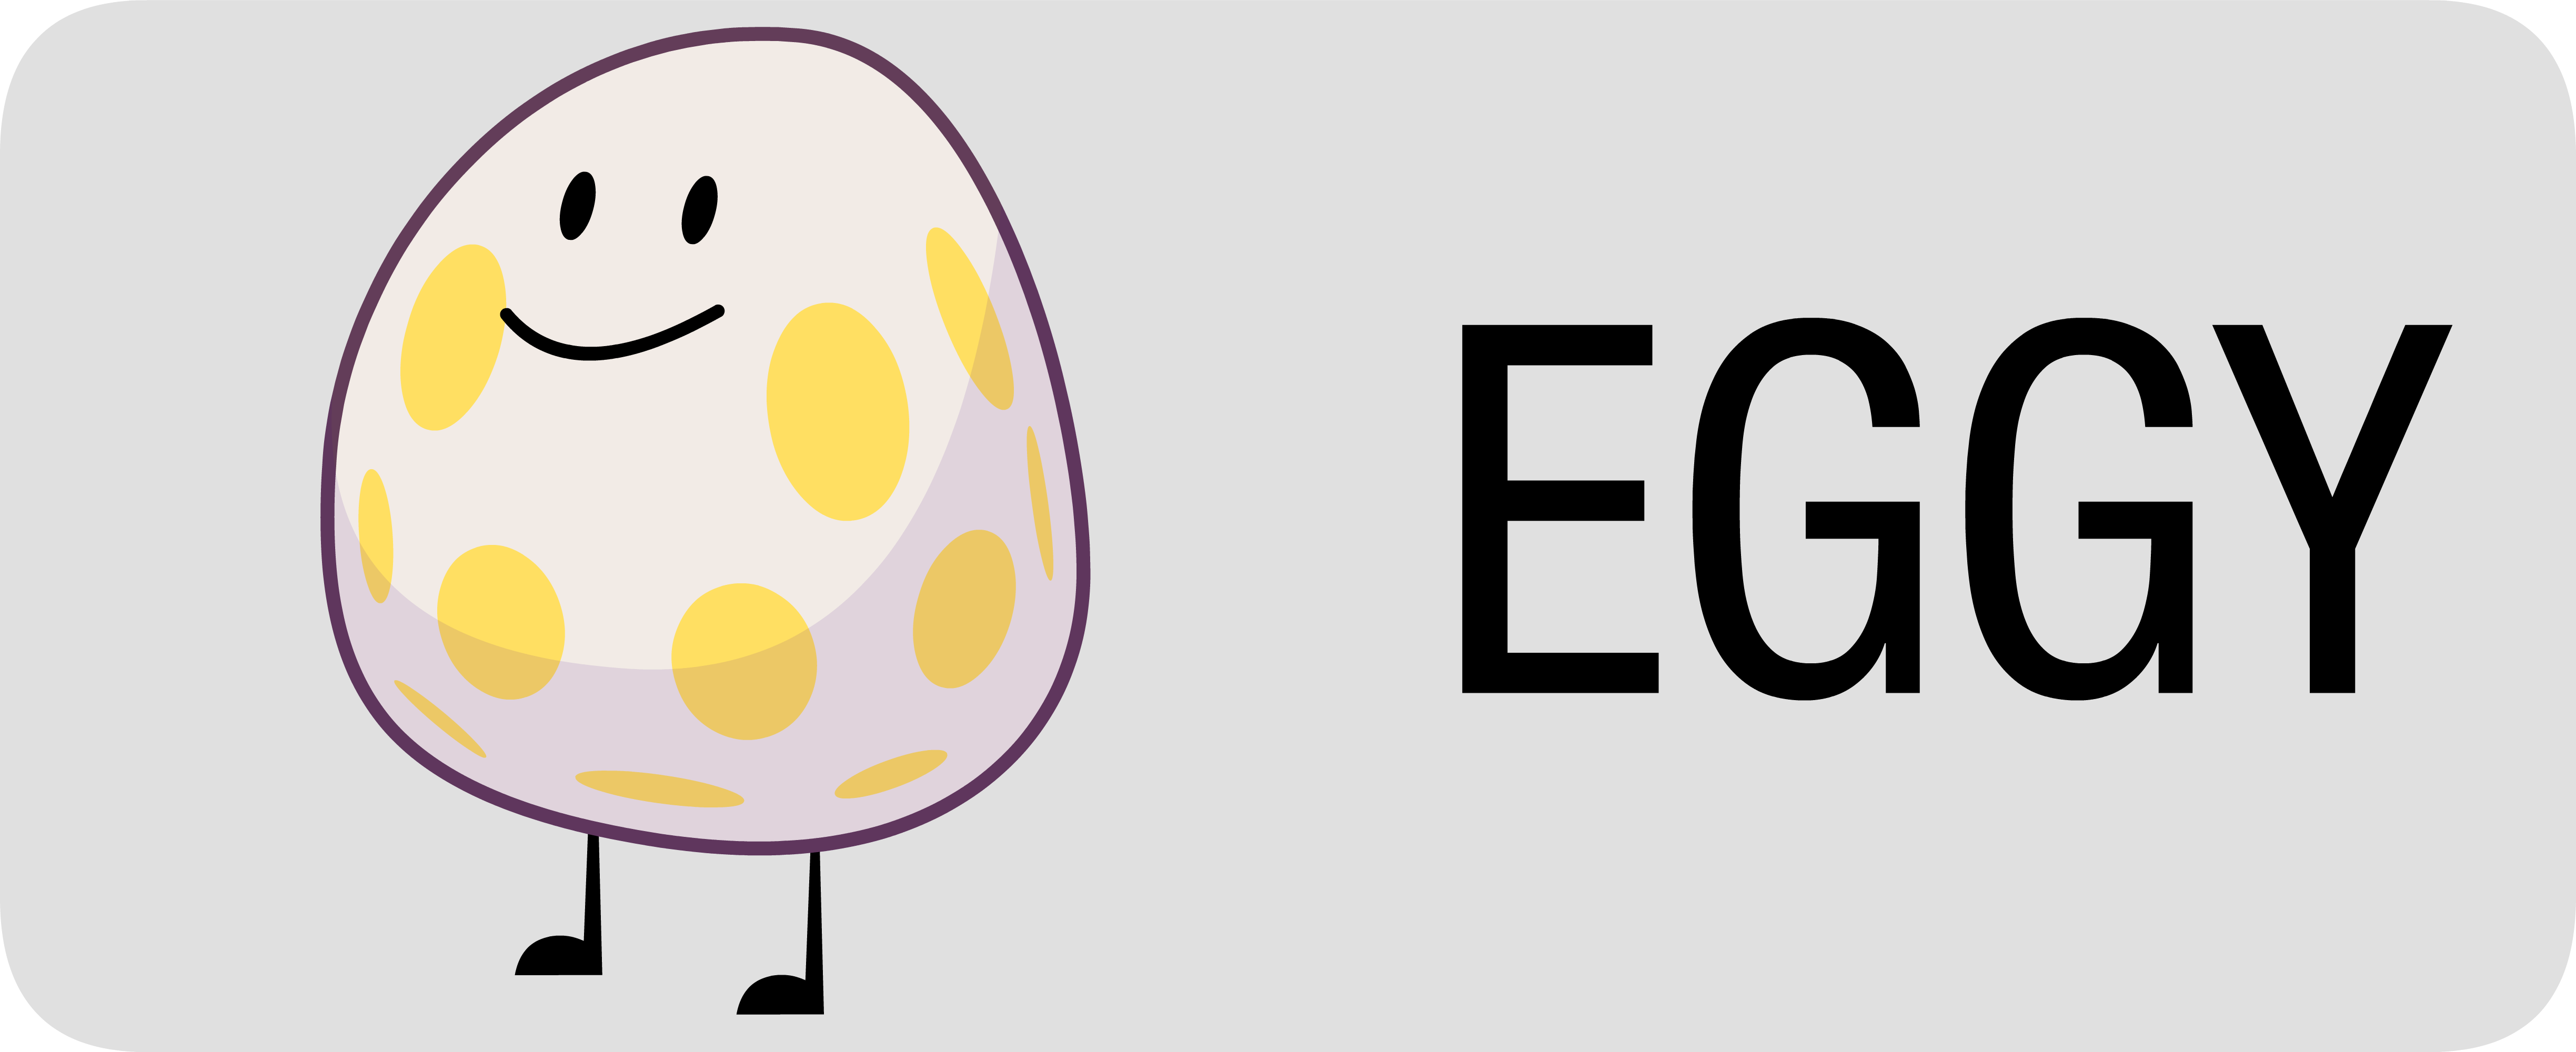 Eggy